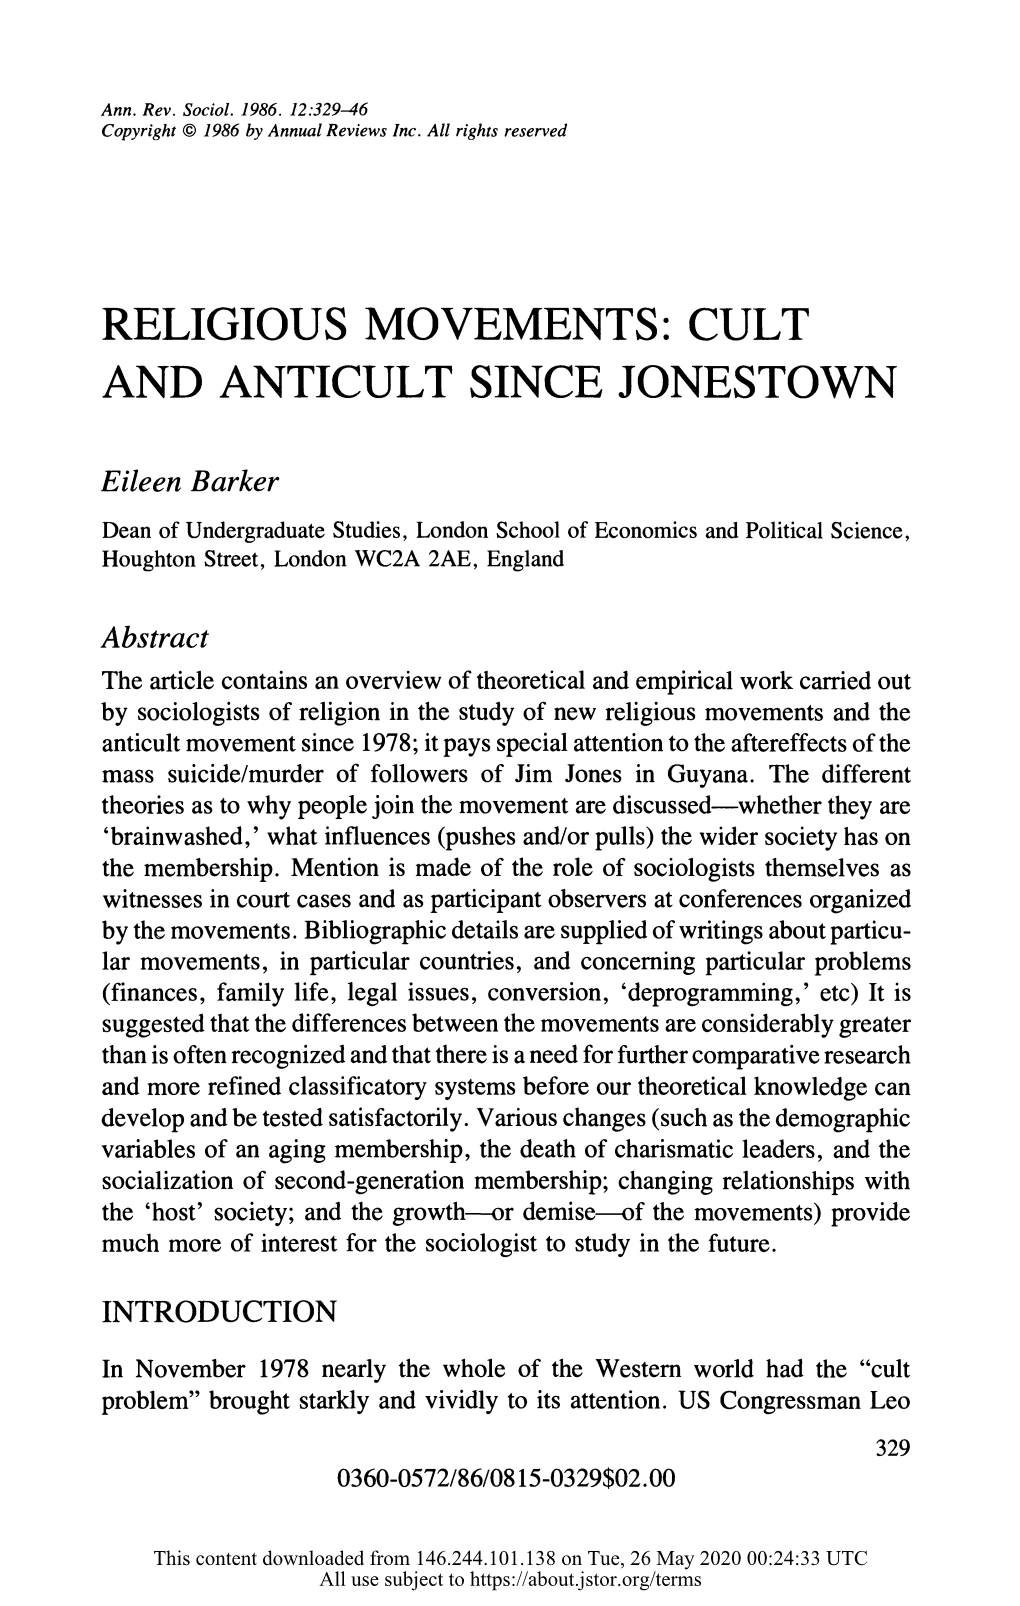 Religous Movements: Cult and Anticult Since Jonestown